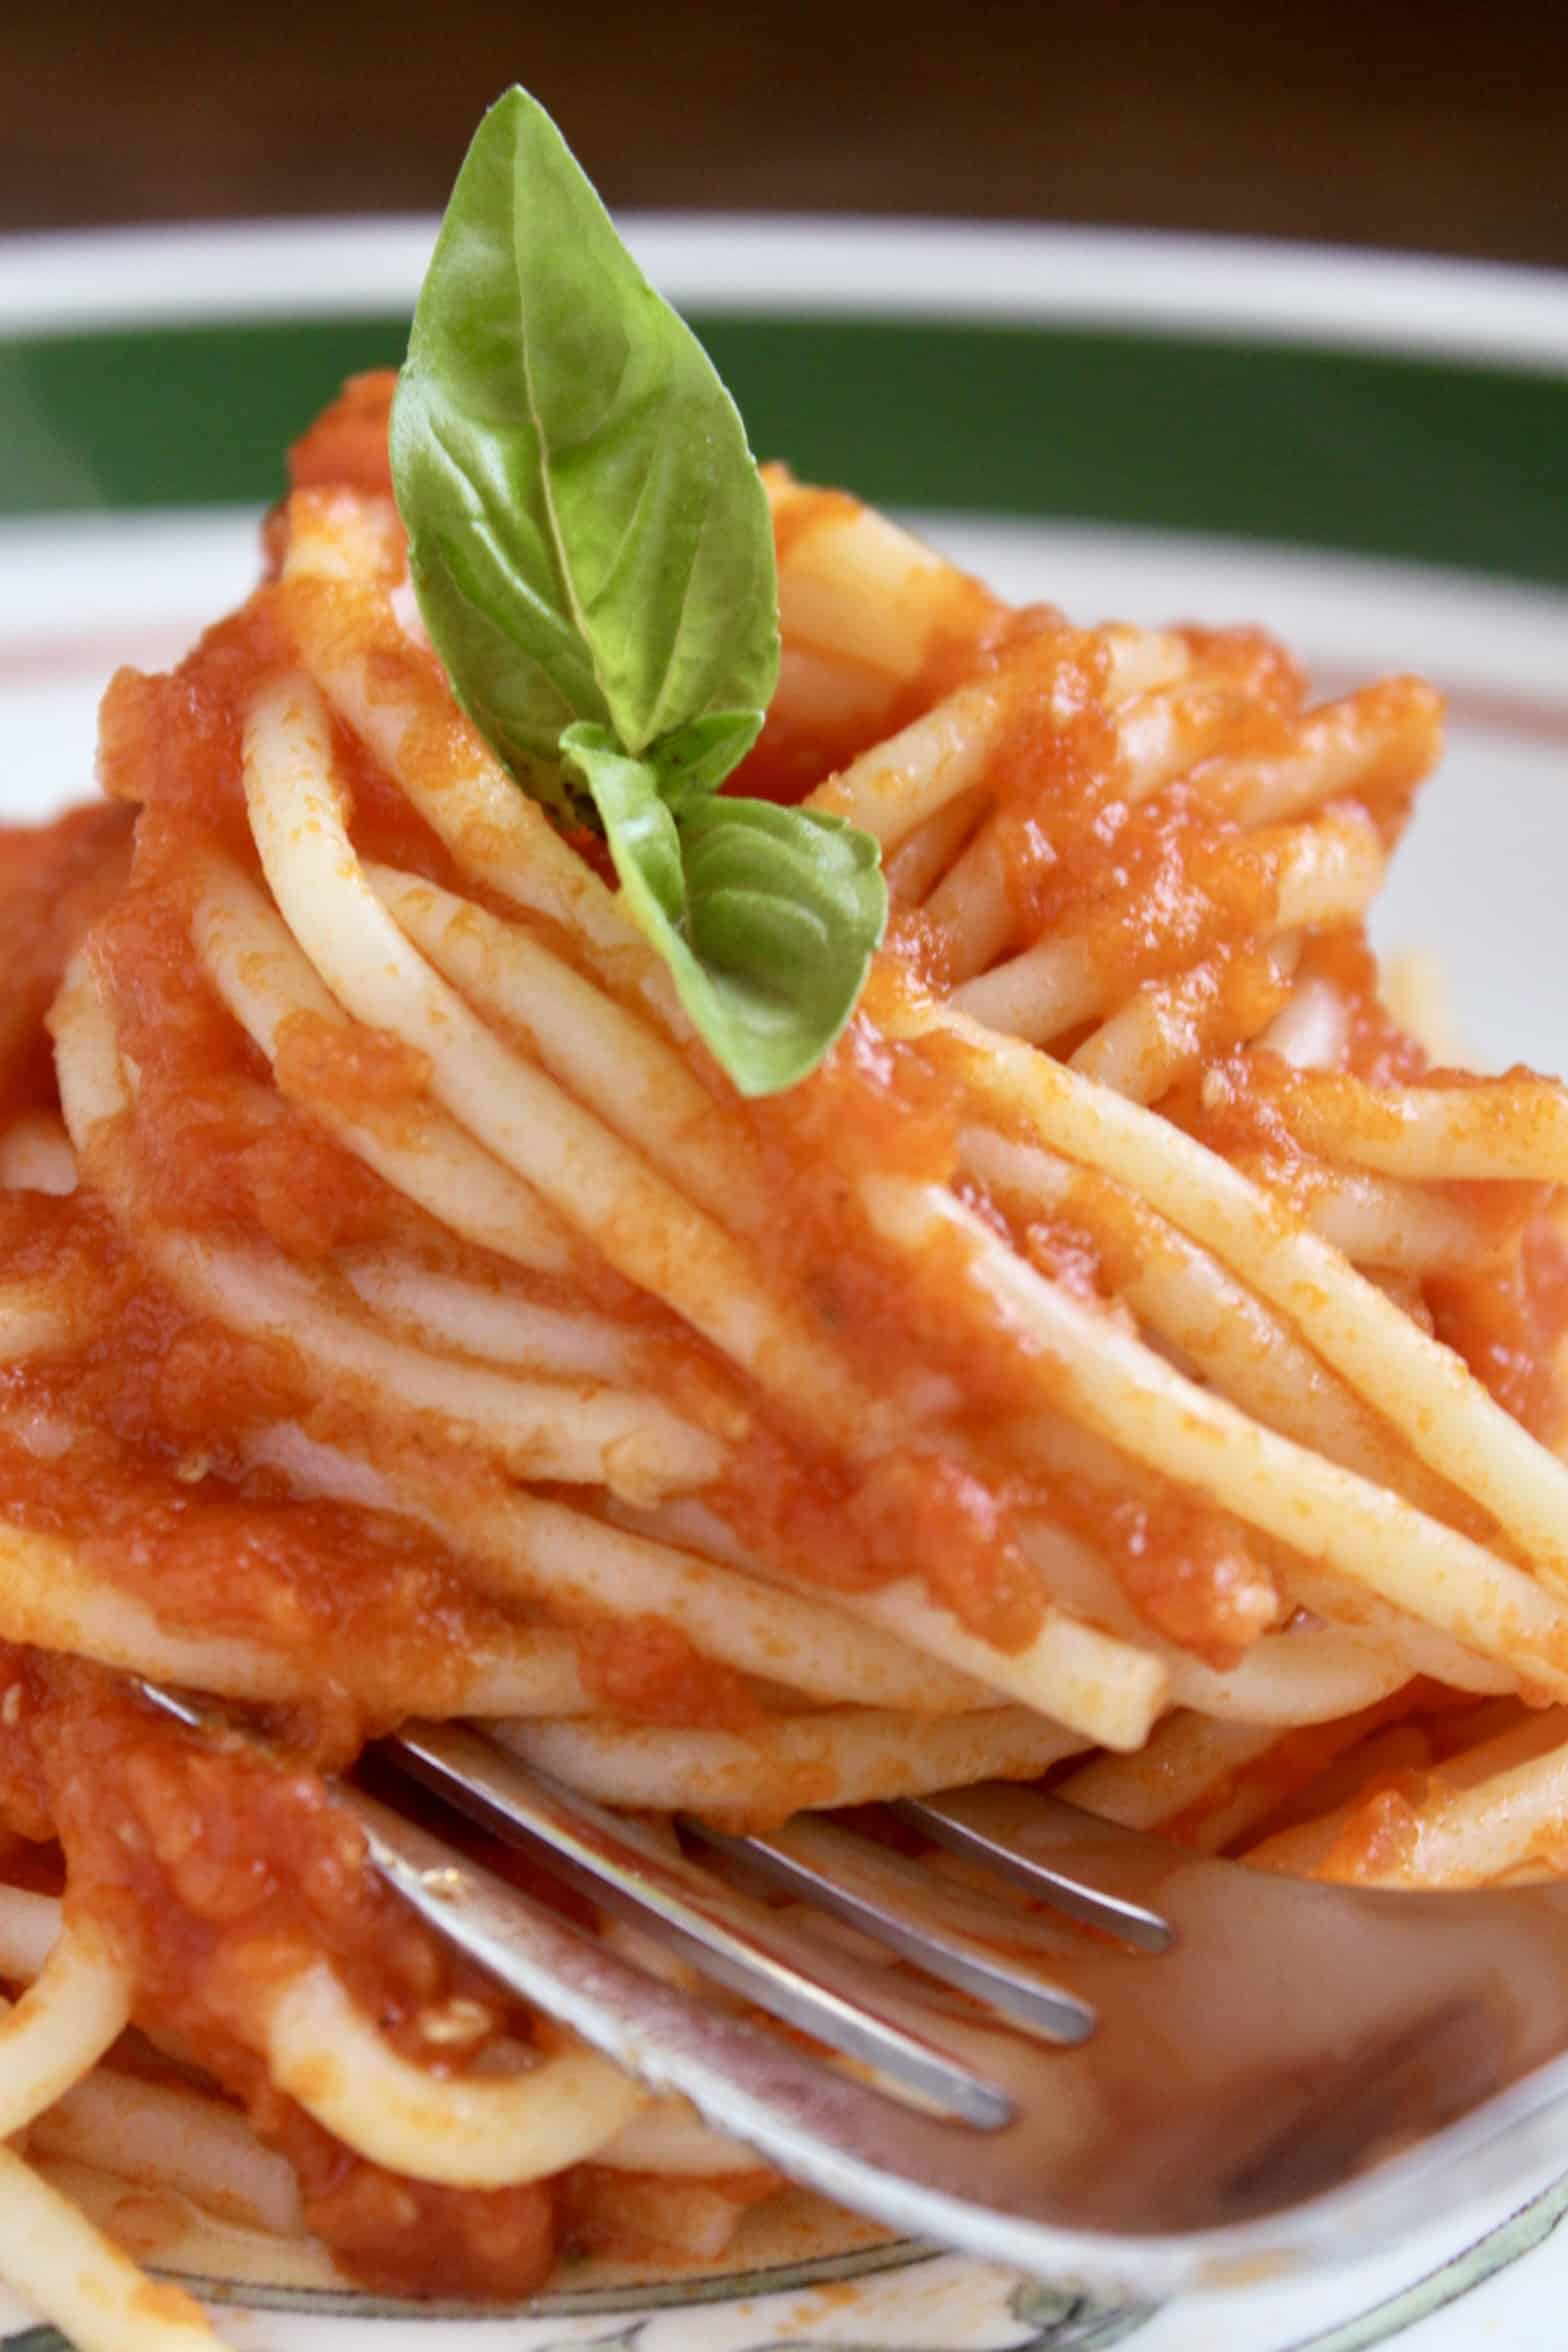 spaghetti with sauce made using this fresh tomato sauce recipe 